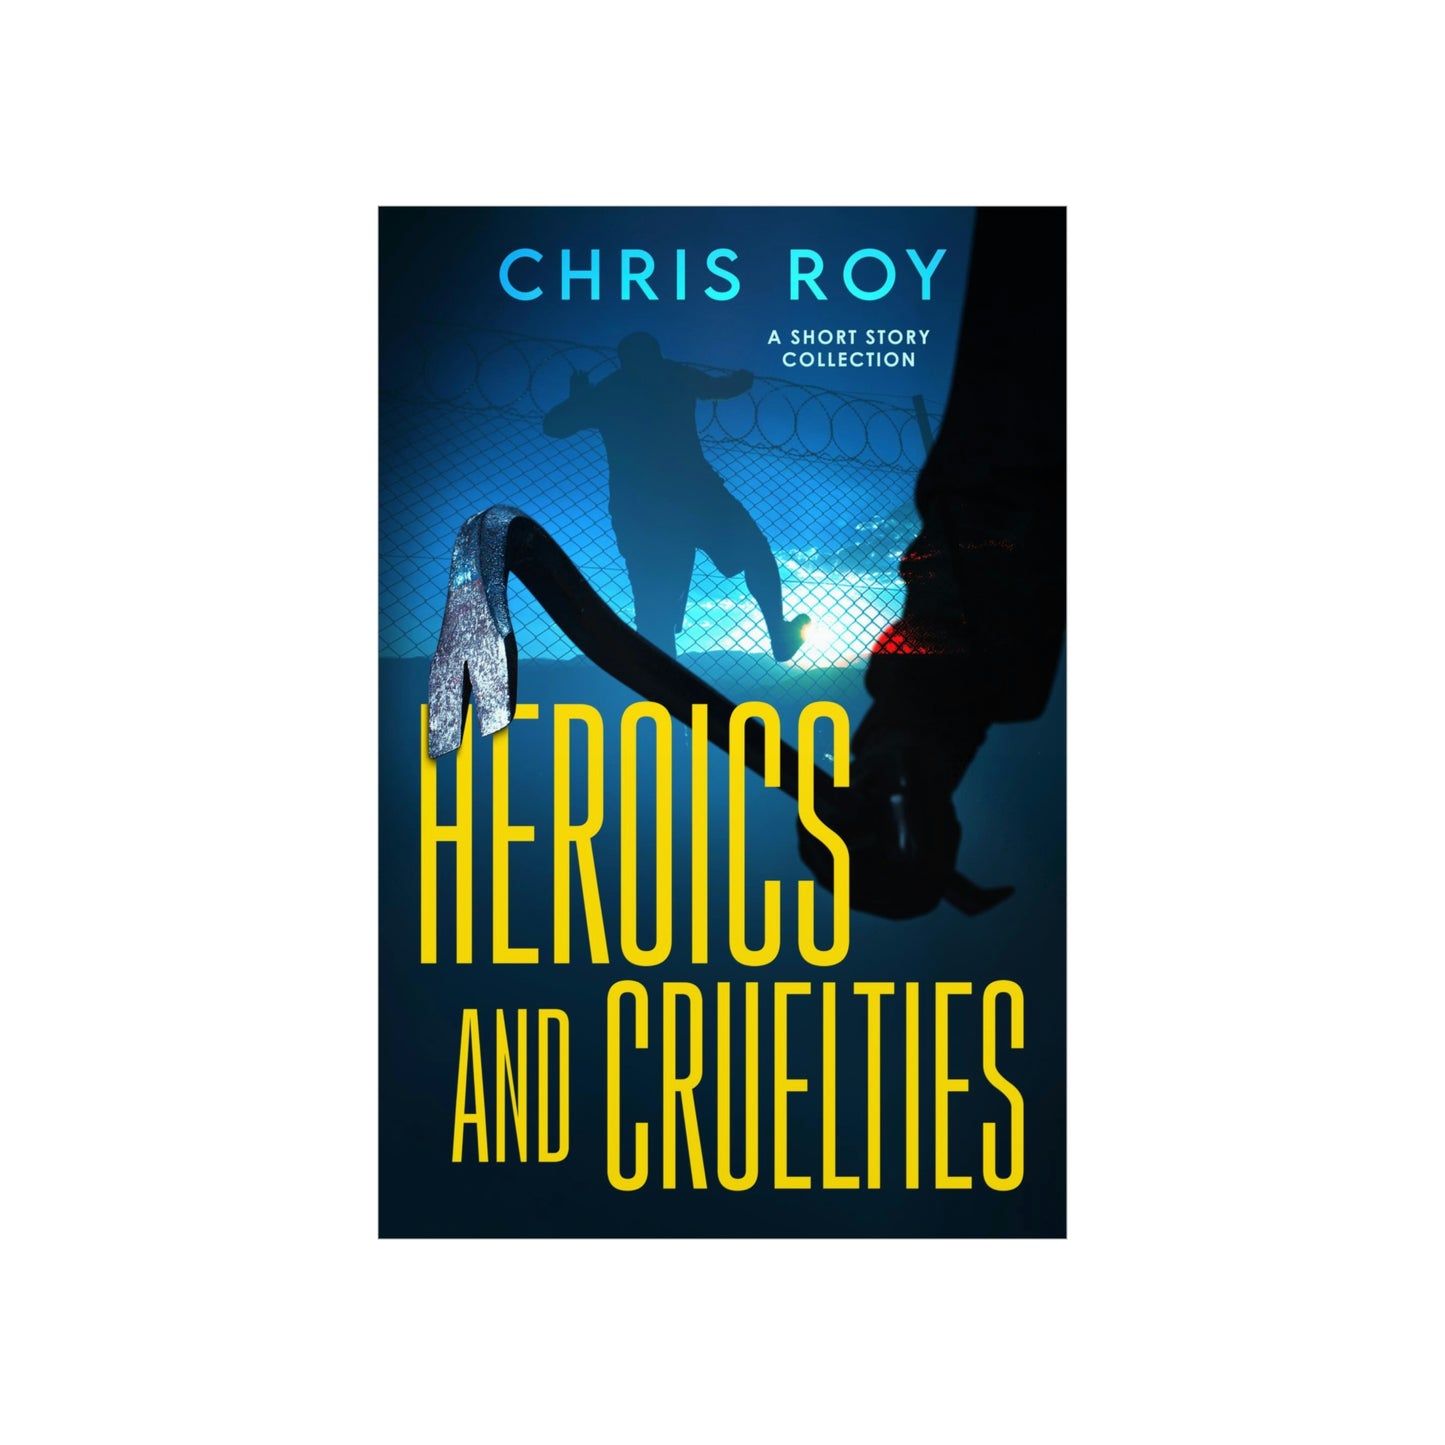 Heroics And Cruelties - Matte Poster